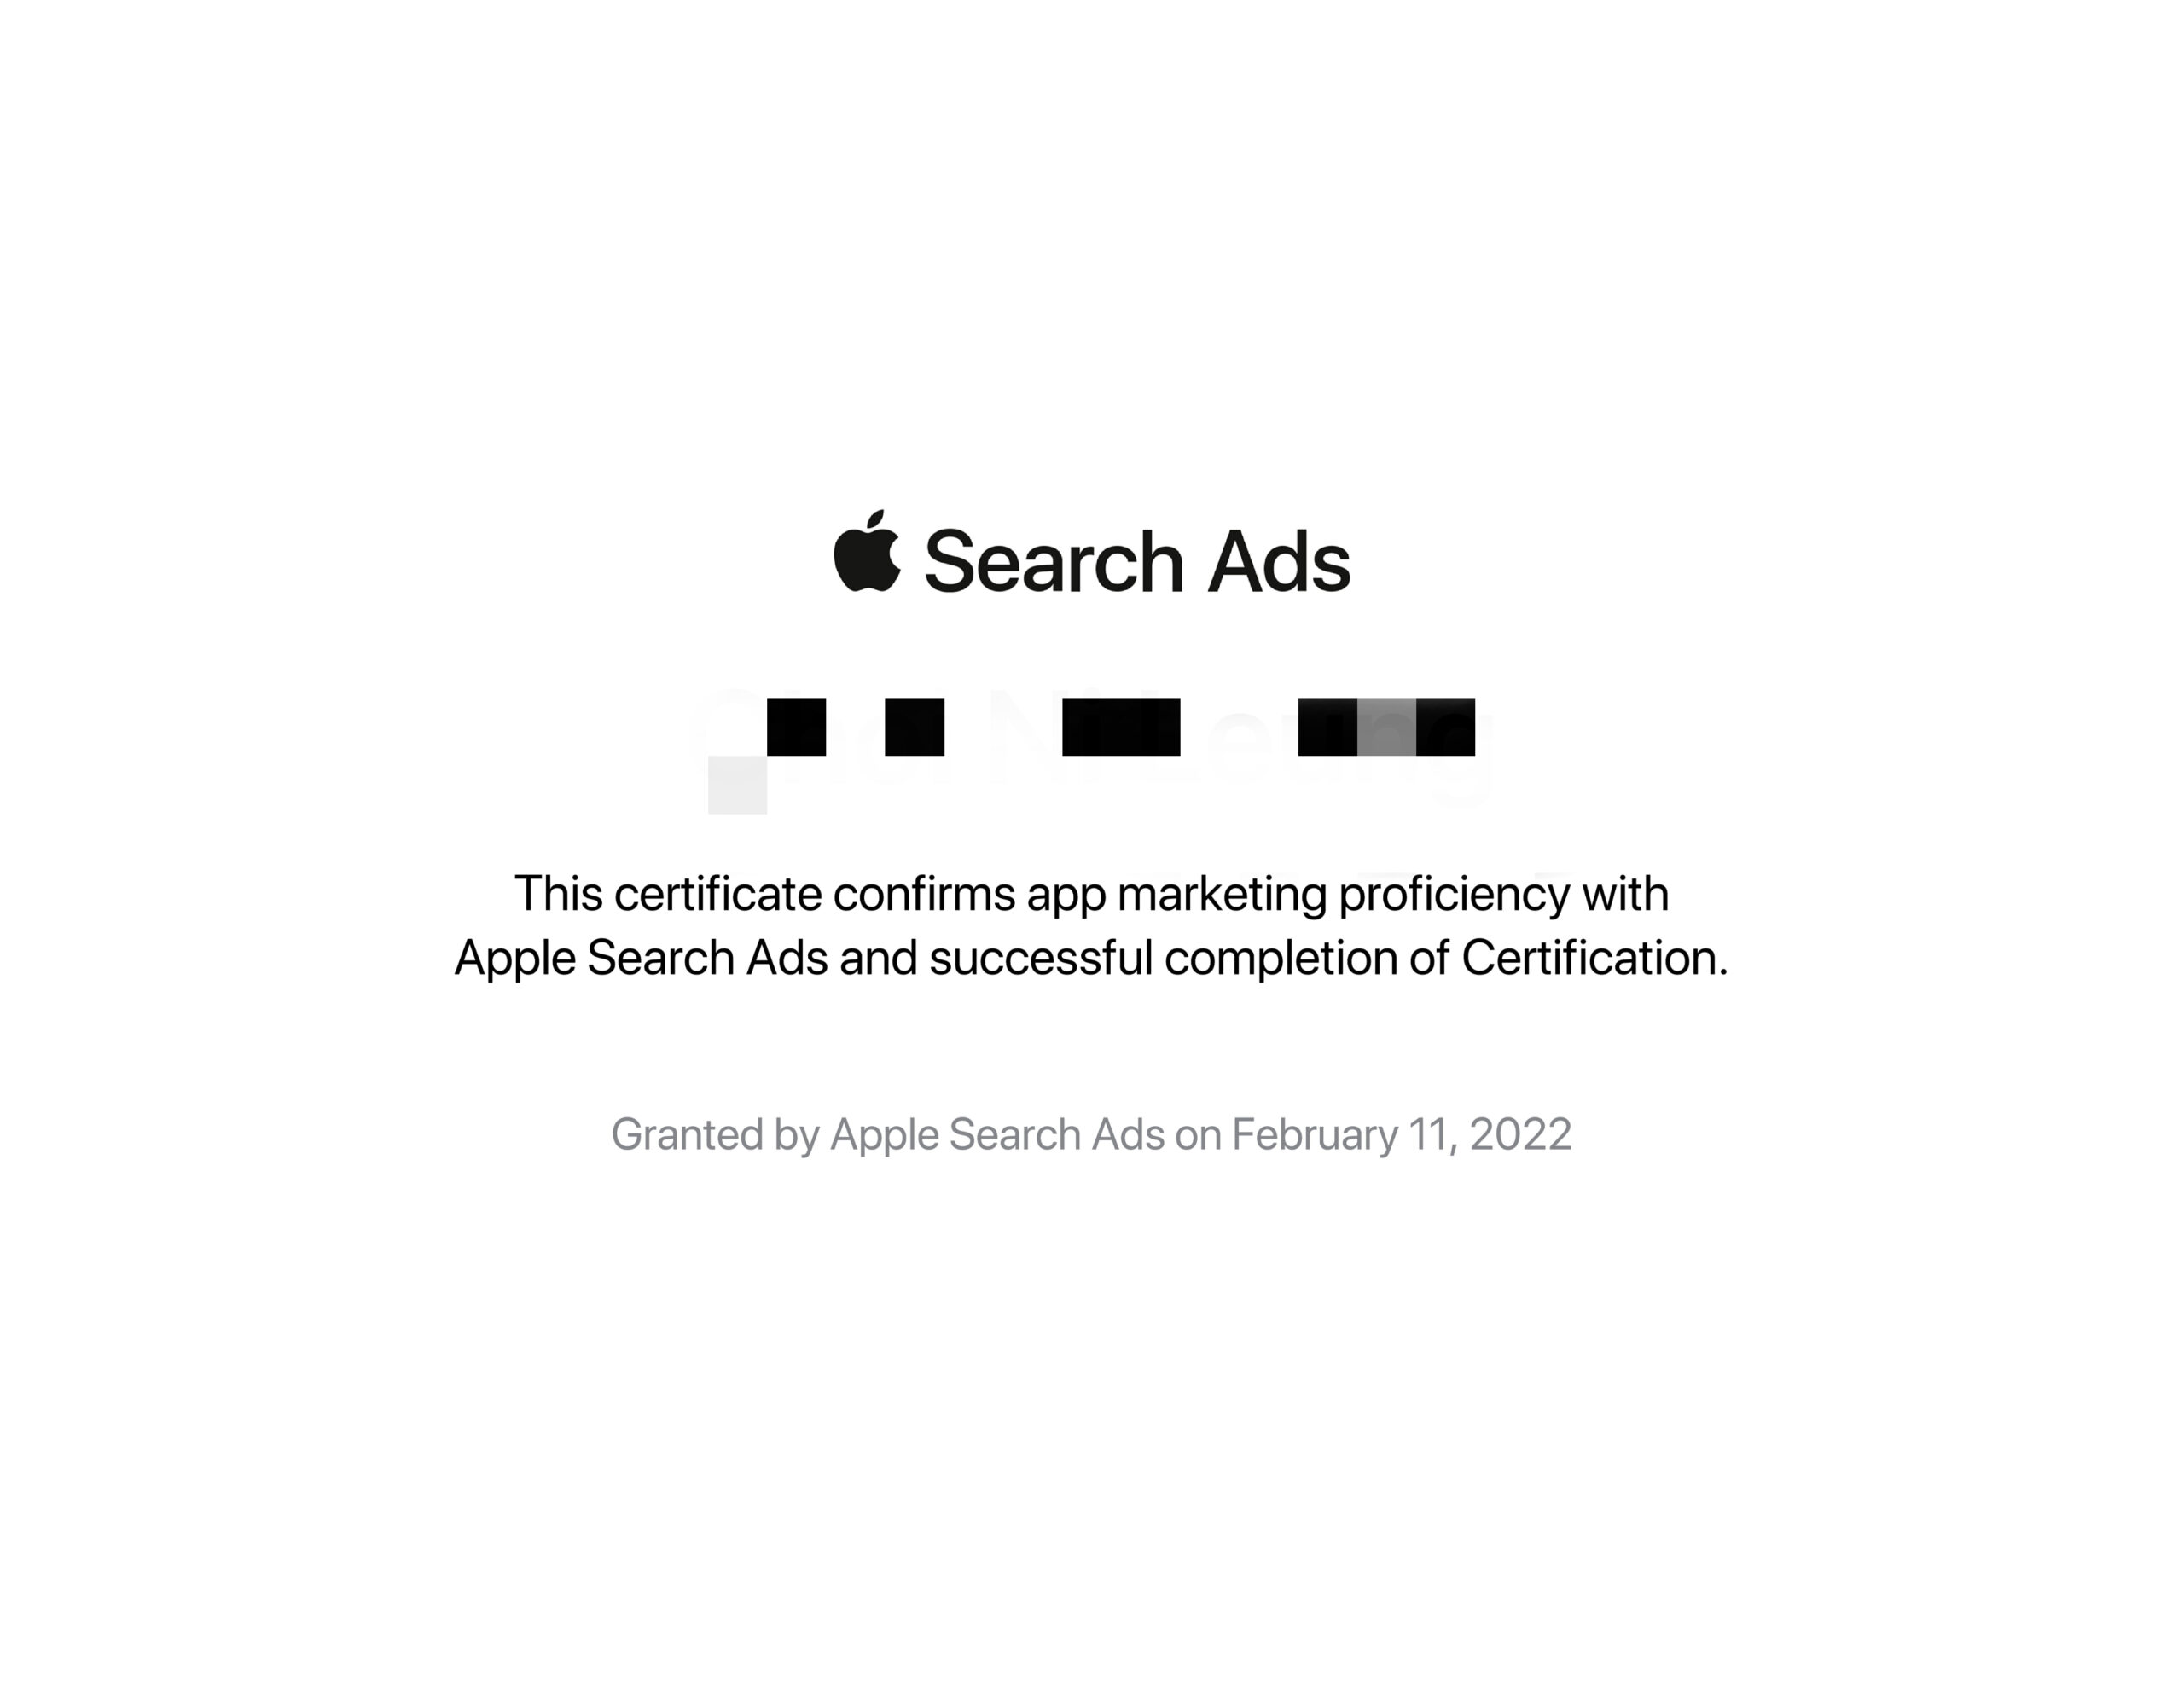 Apple Search Ads Certification Certificate